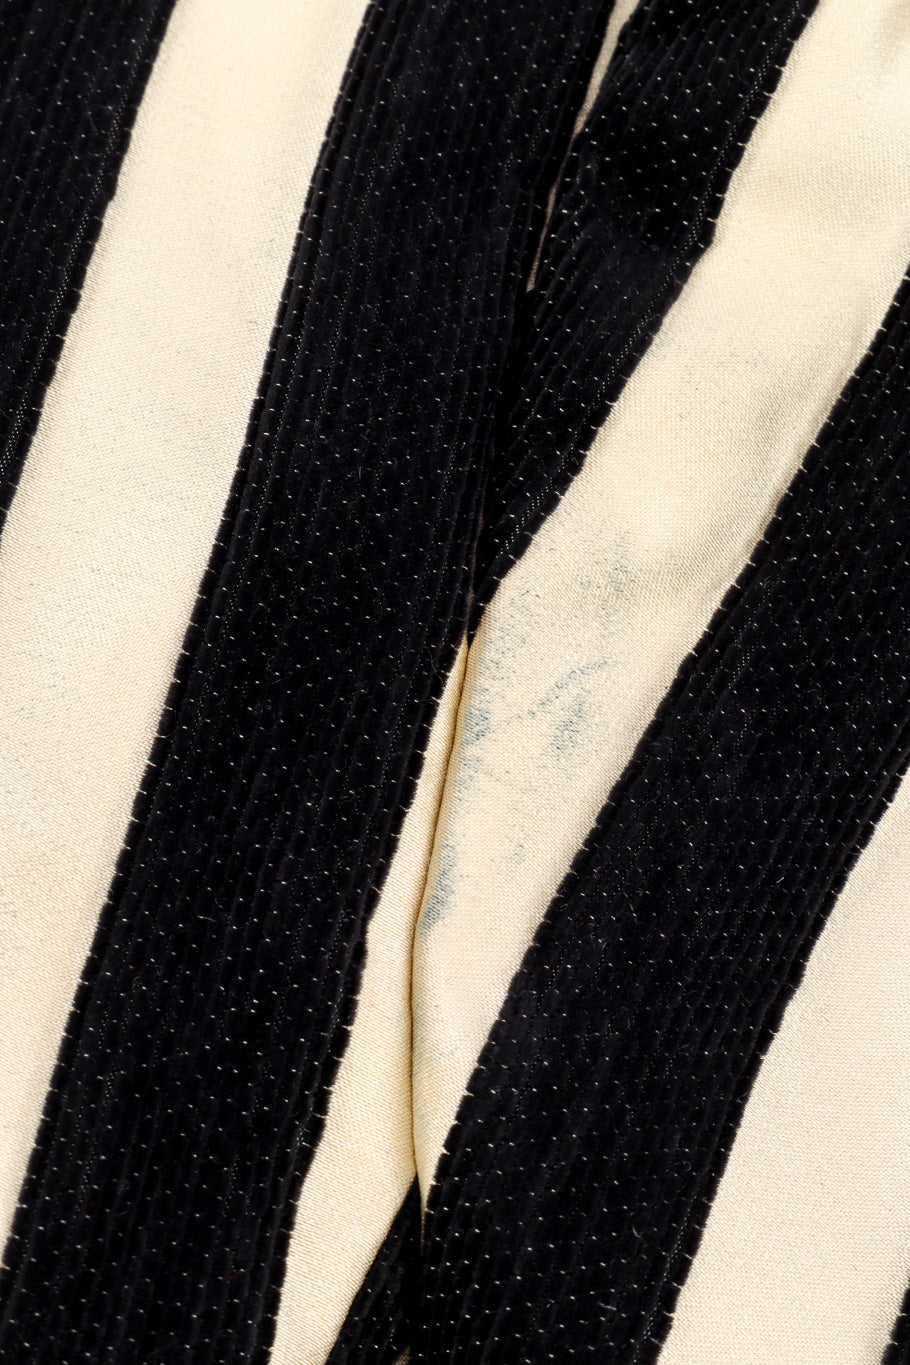 Vintage Bill Blass Striped Bolero Jacket stain near back shoulder @recessla